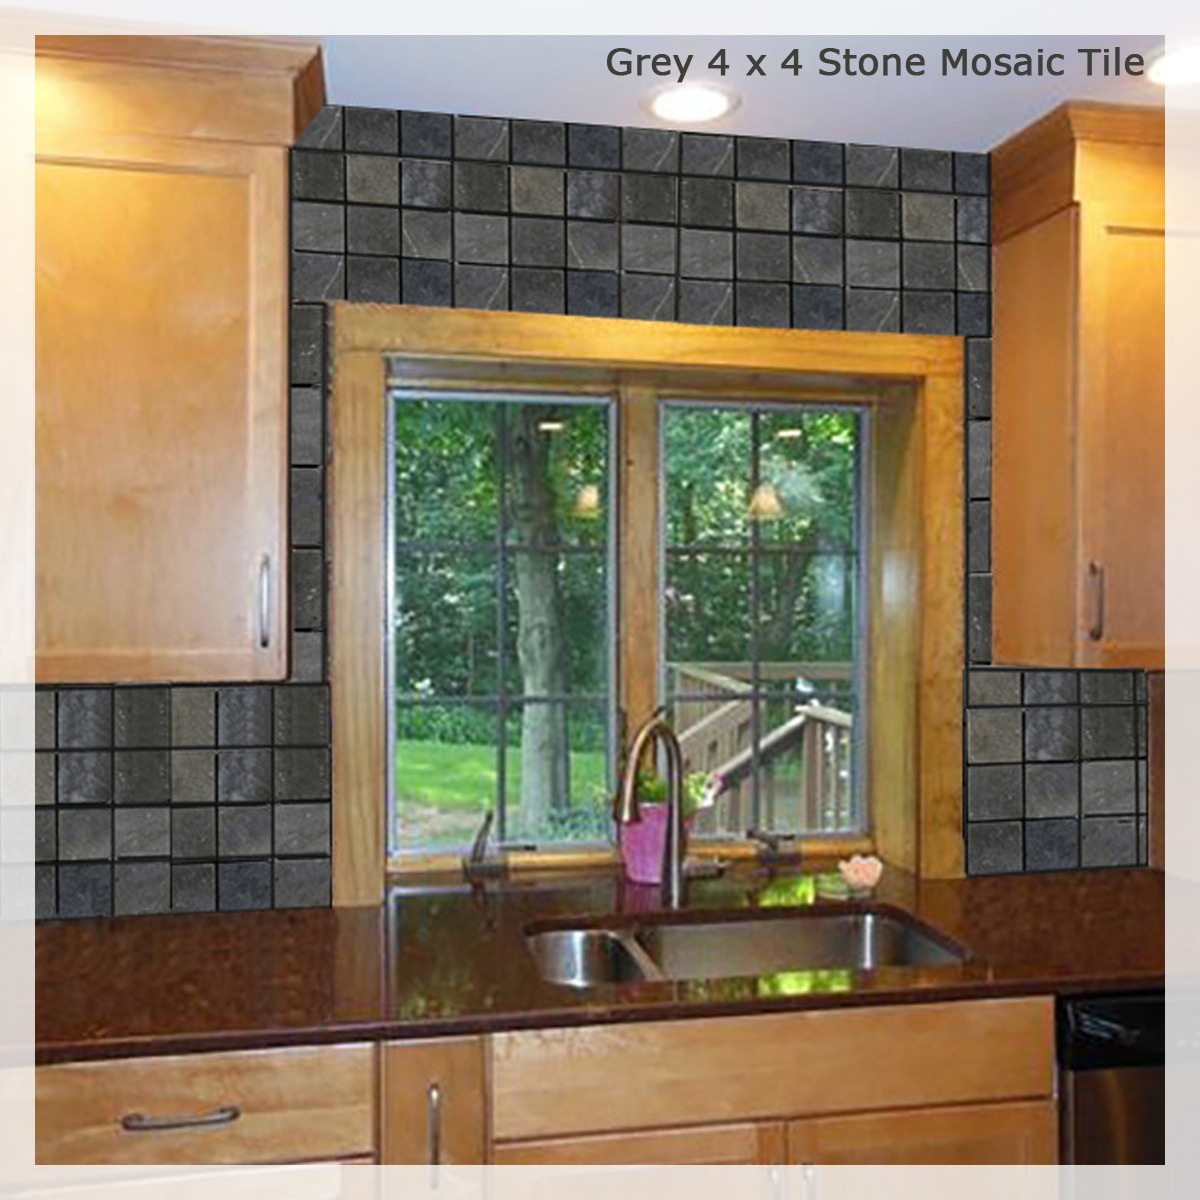  Grey 4 x 4 Stone Mosaic Tile